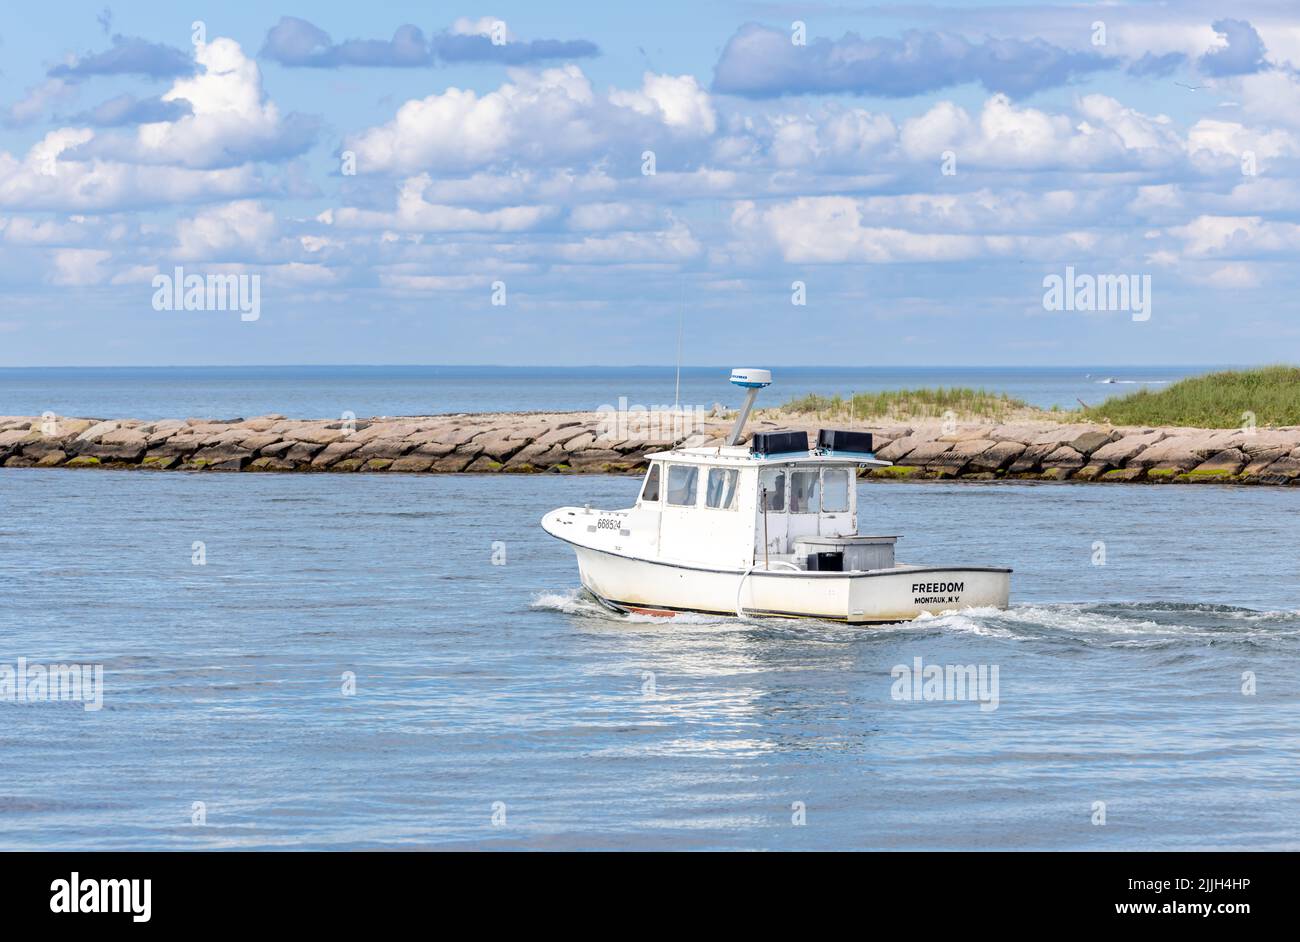 Barco de pesca, Libertad saliendo de Montauk, NY Foto de stock